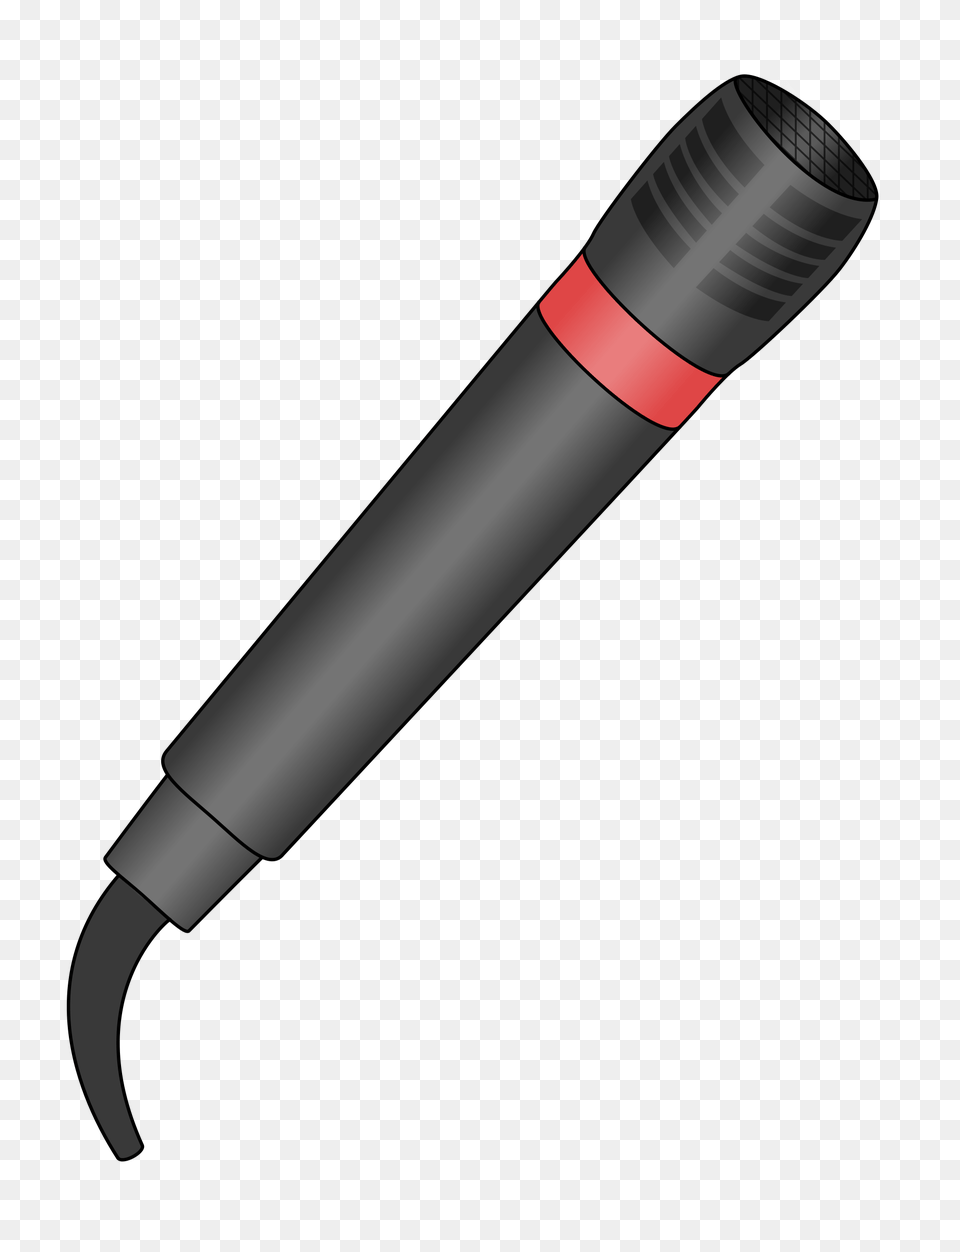 Podcast Clipart Microphone Transparent Stick U2013 Gclipartcom Microphone Clip Art, Electrical Device, Appliance, Blow Dryer, Device Png